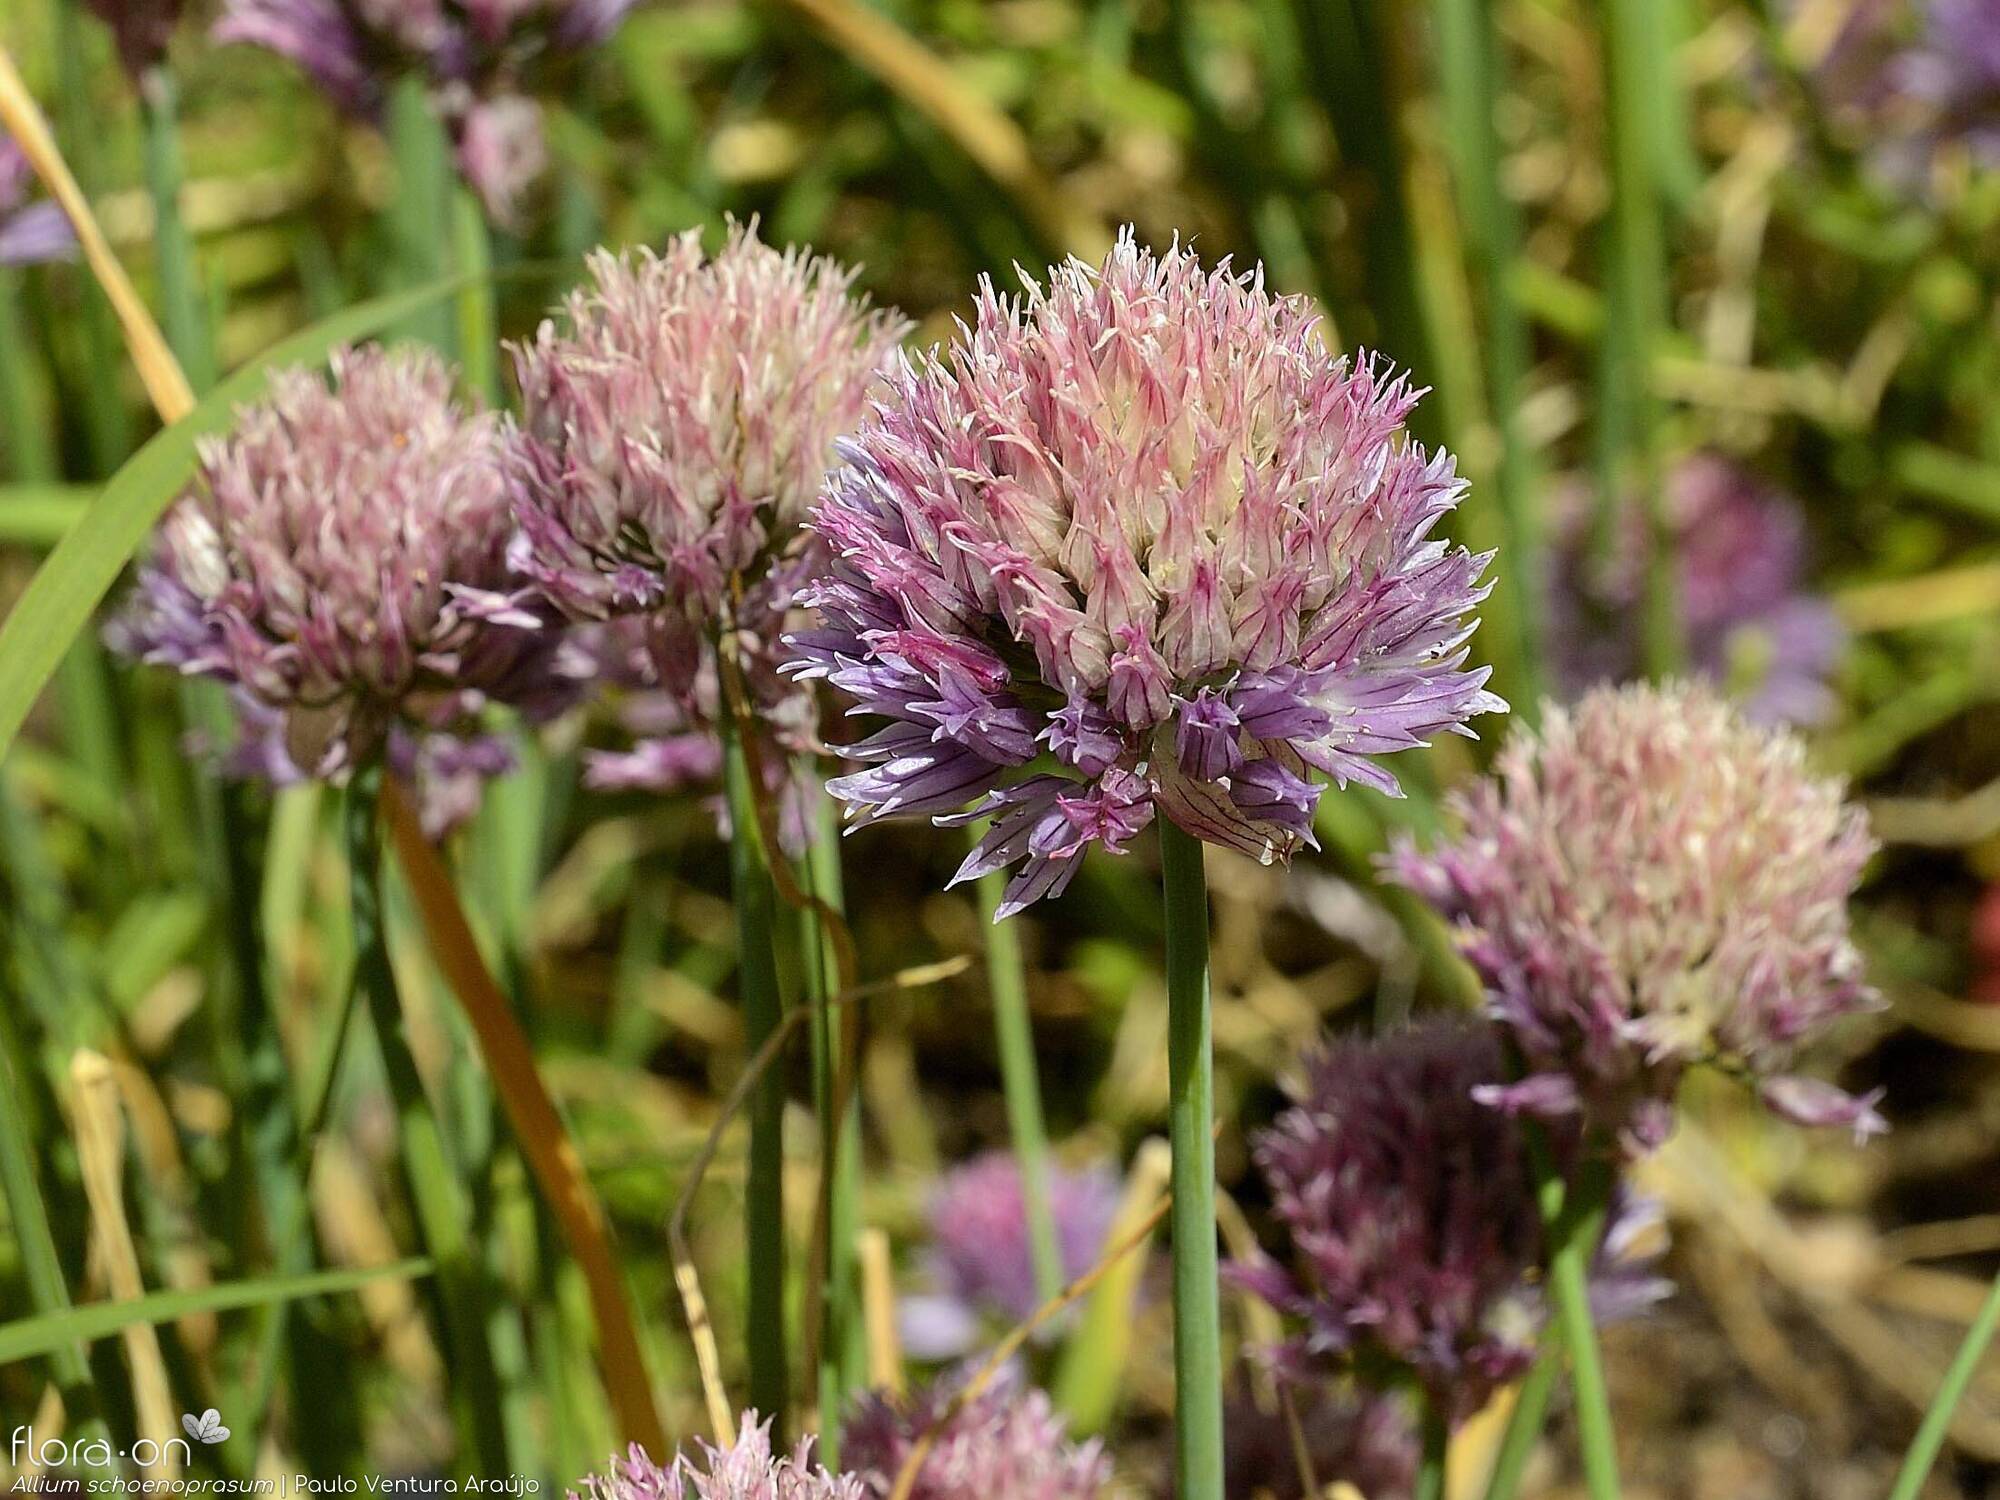 Allium schoenoprasum - Flor (geral) | Paulo Ventura Araújo; CC BY-NC 4.0